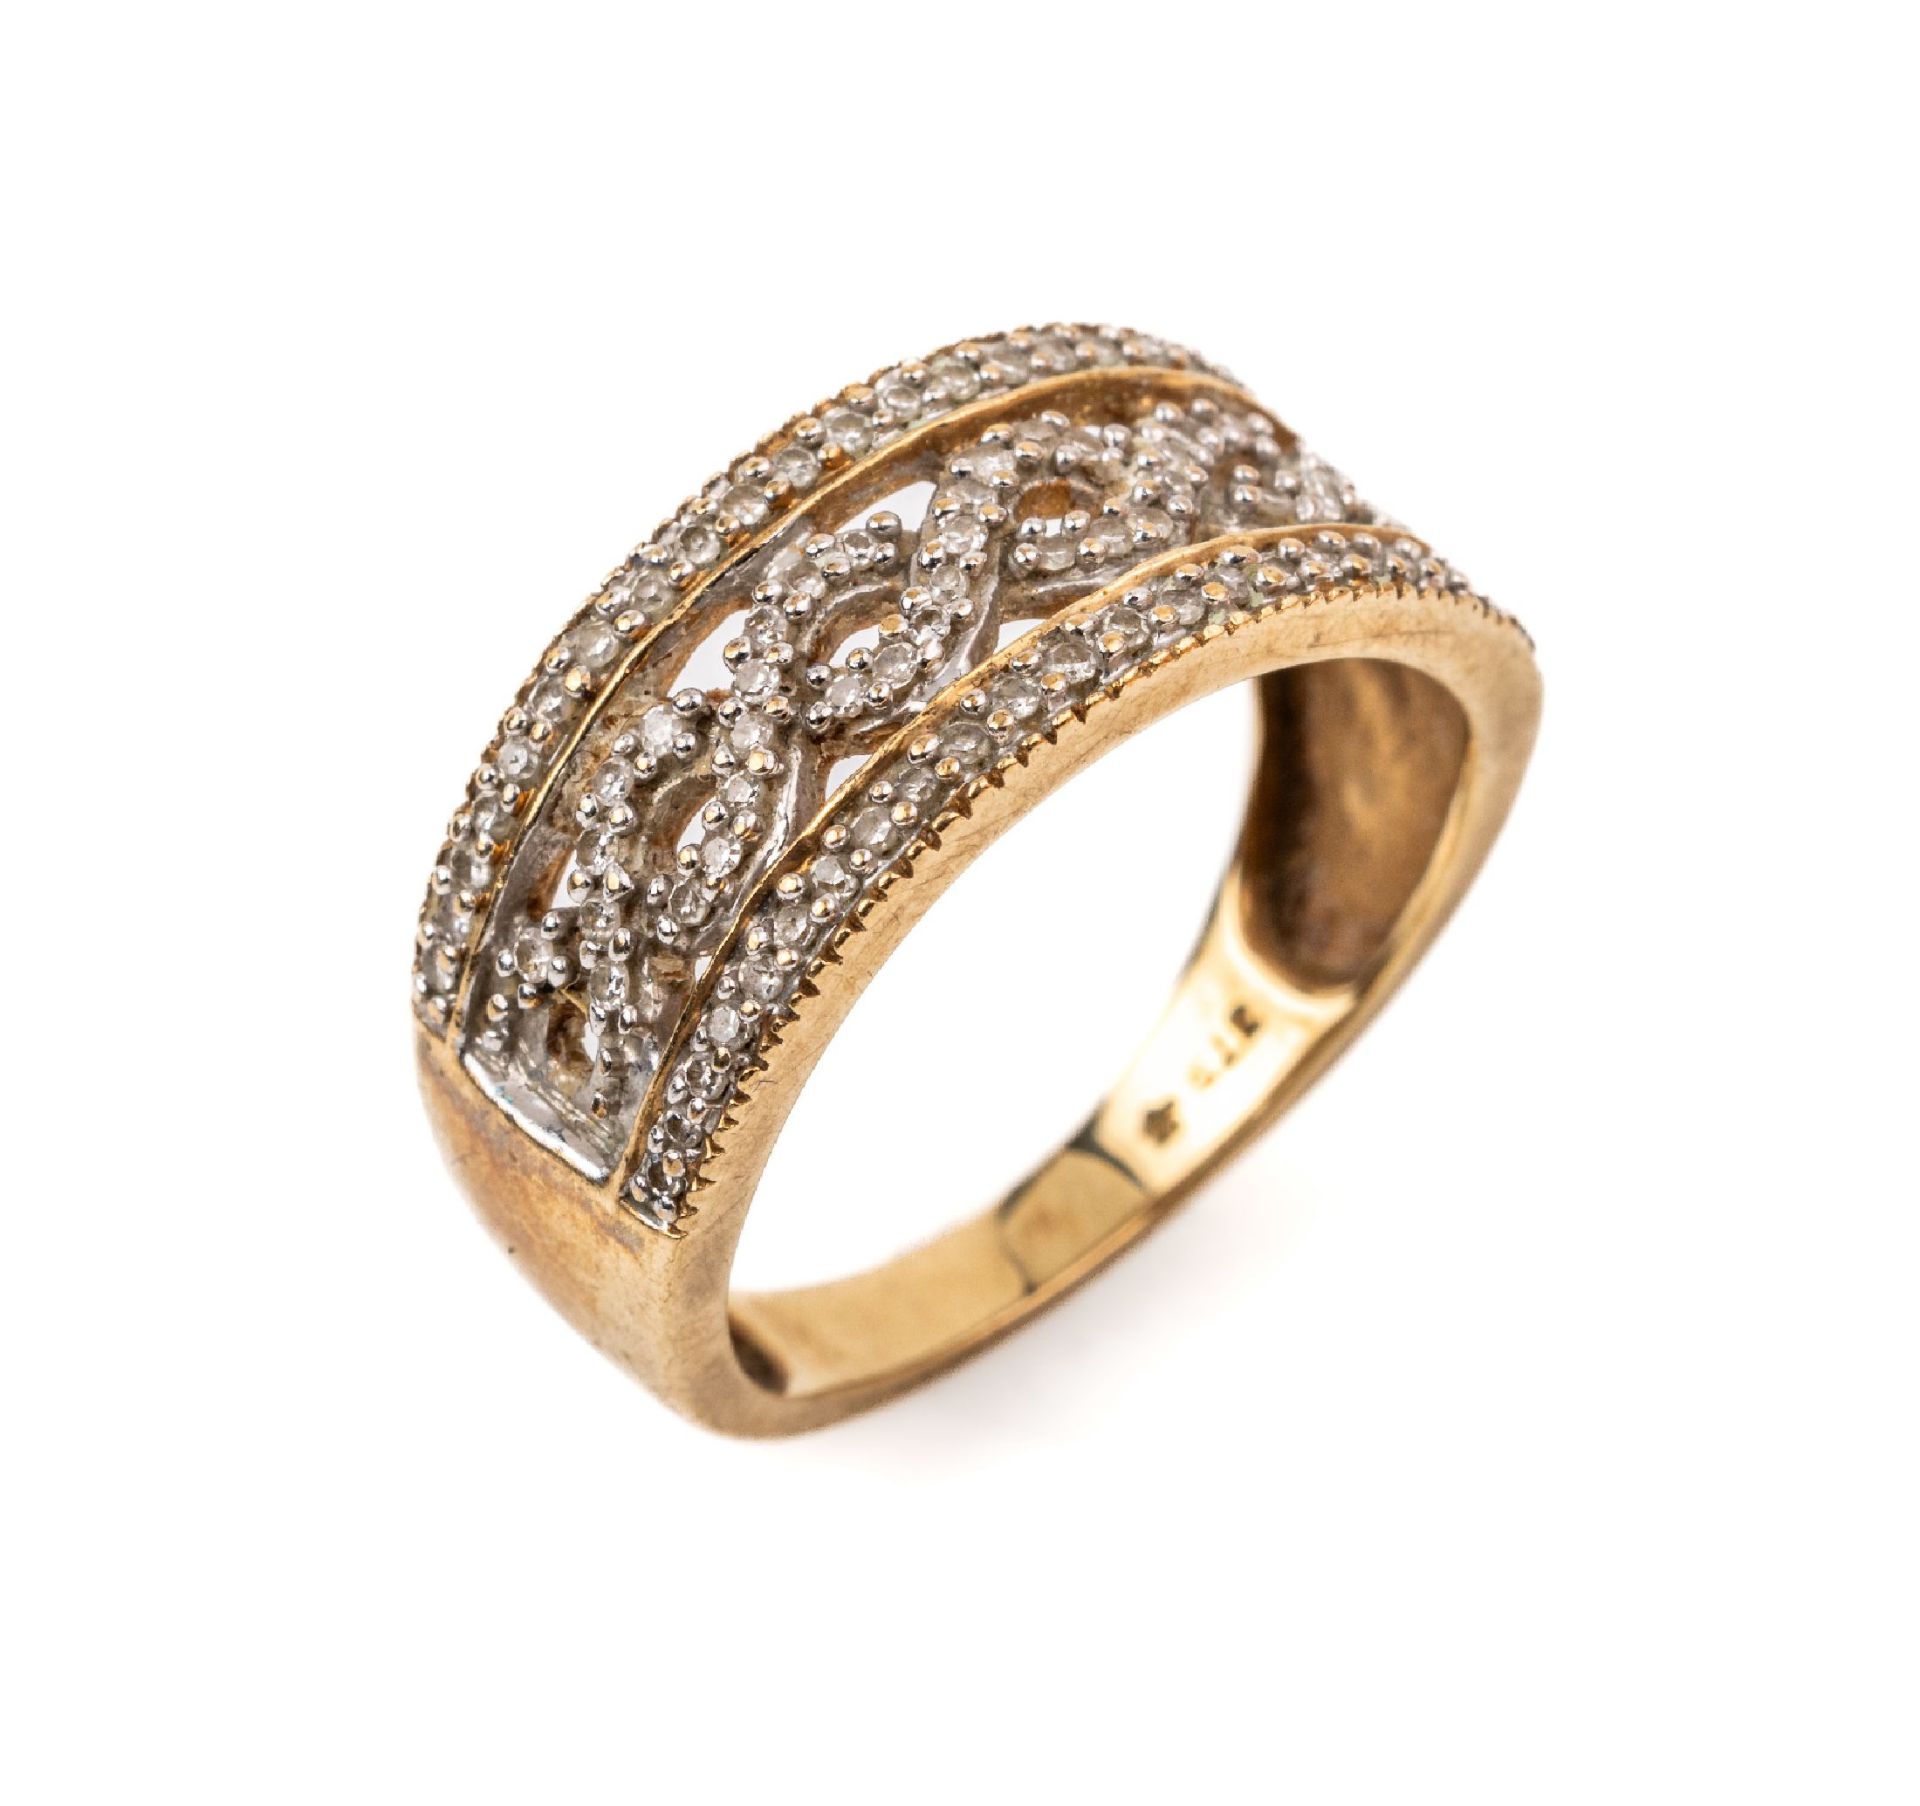 9 kt Gold Diamant-Ring, GG/WG 375/000, durchbrochen